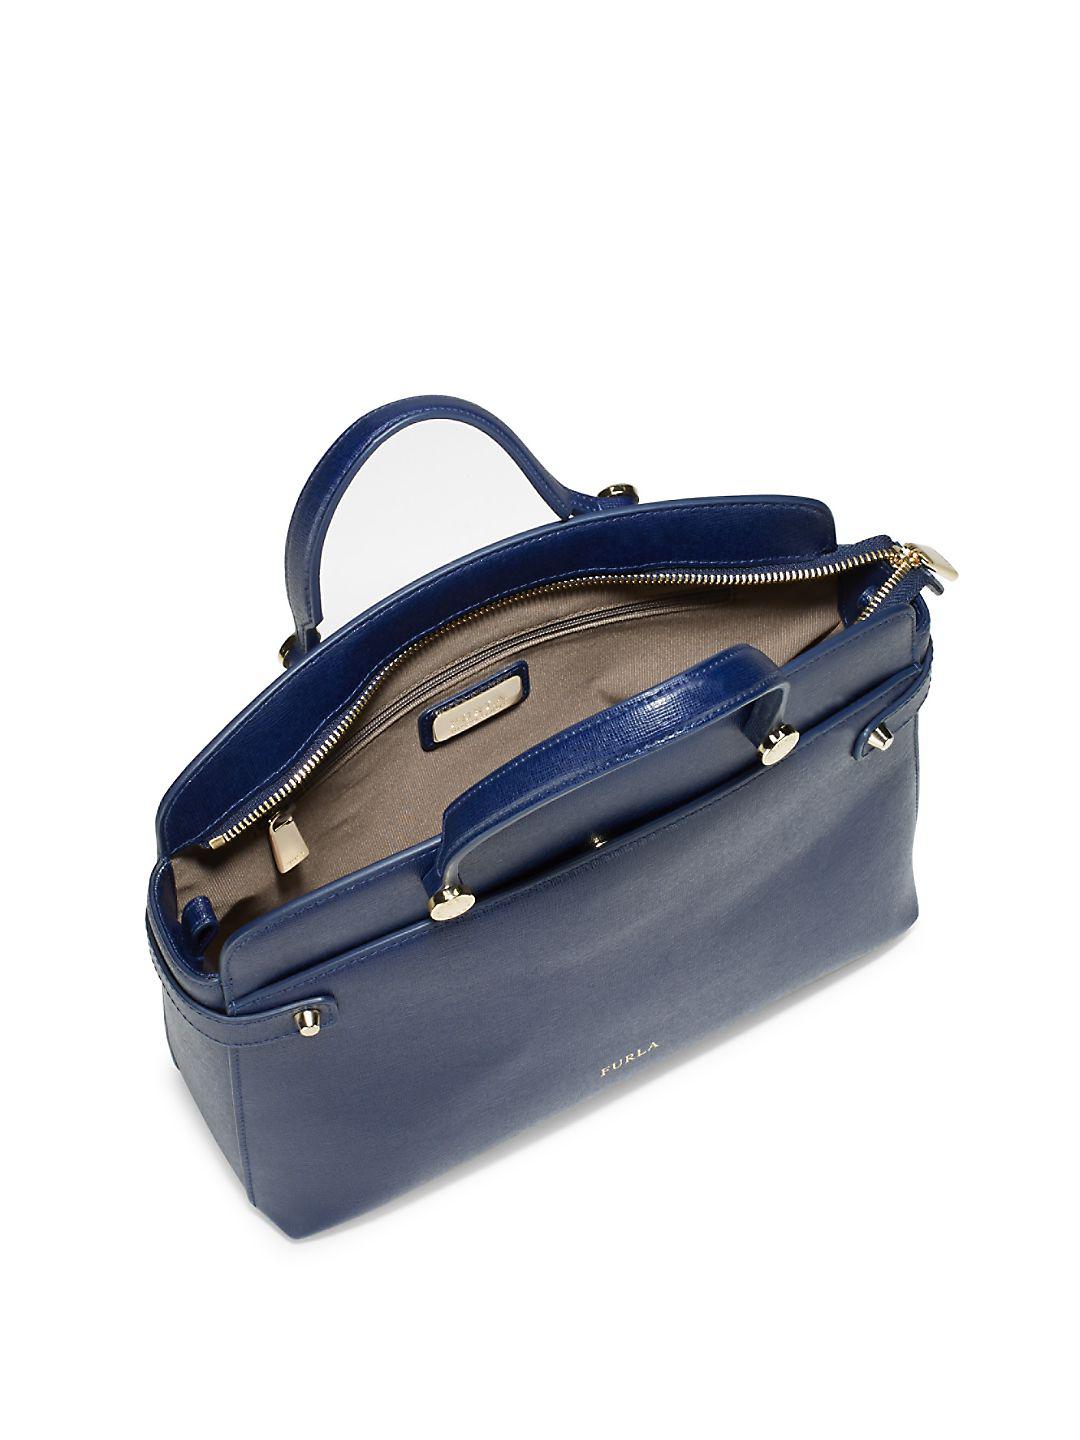 Furla Agata Leather Tote Bag in Blue | Lyst